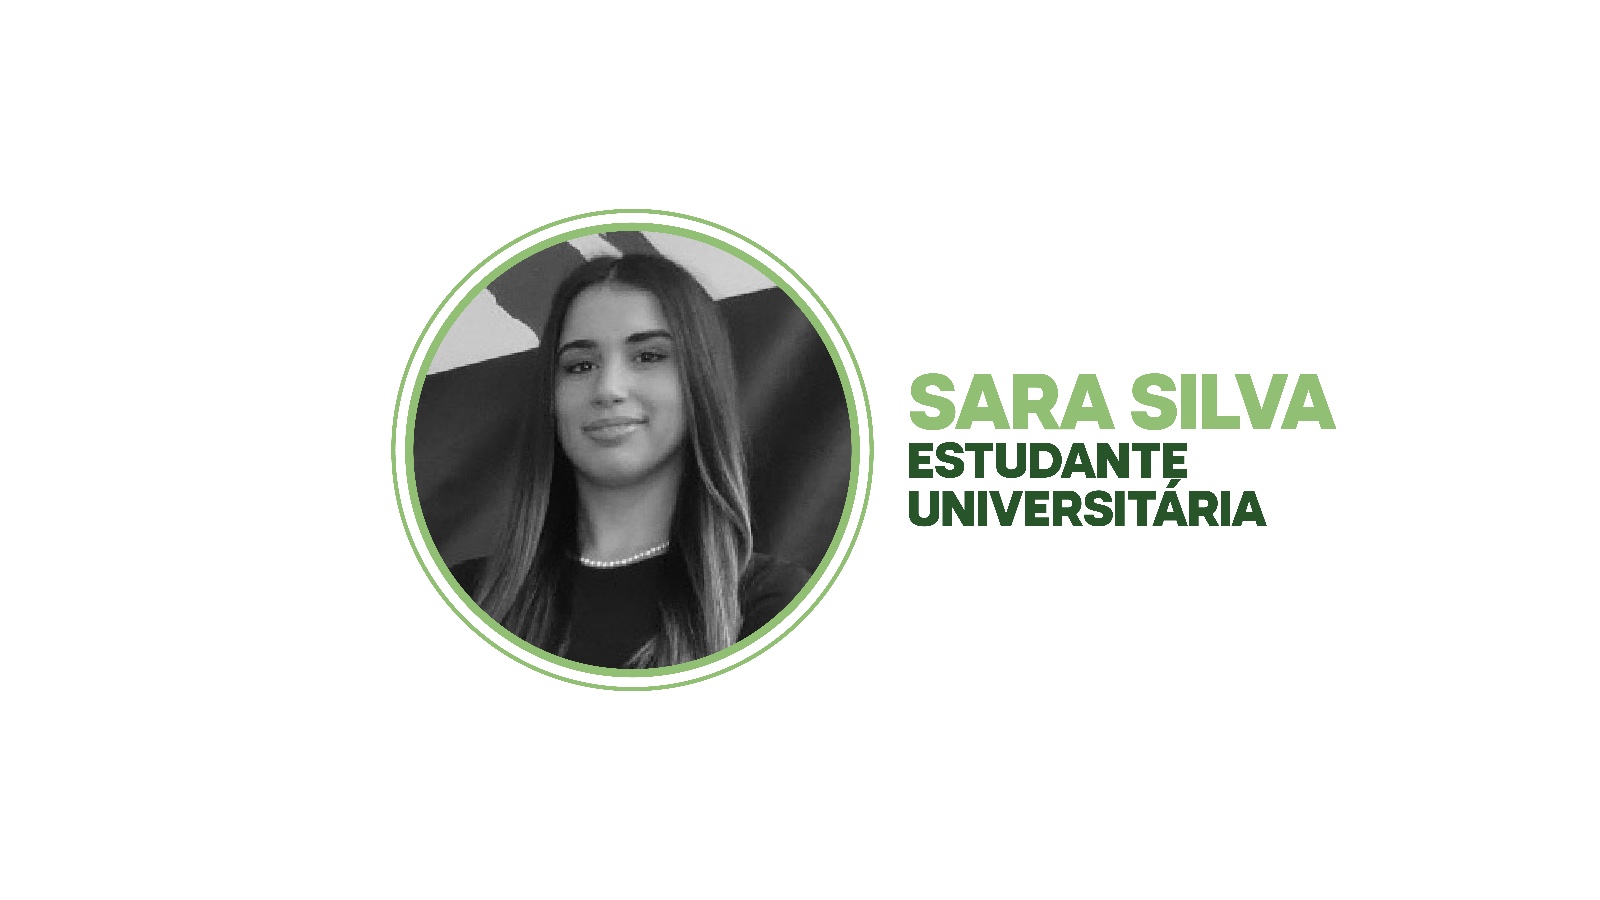 Sara Silva